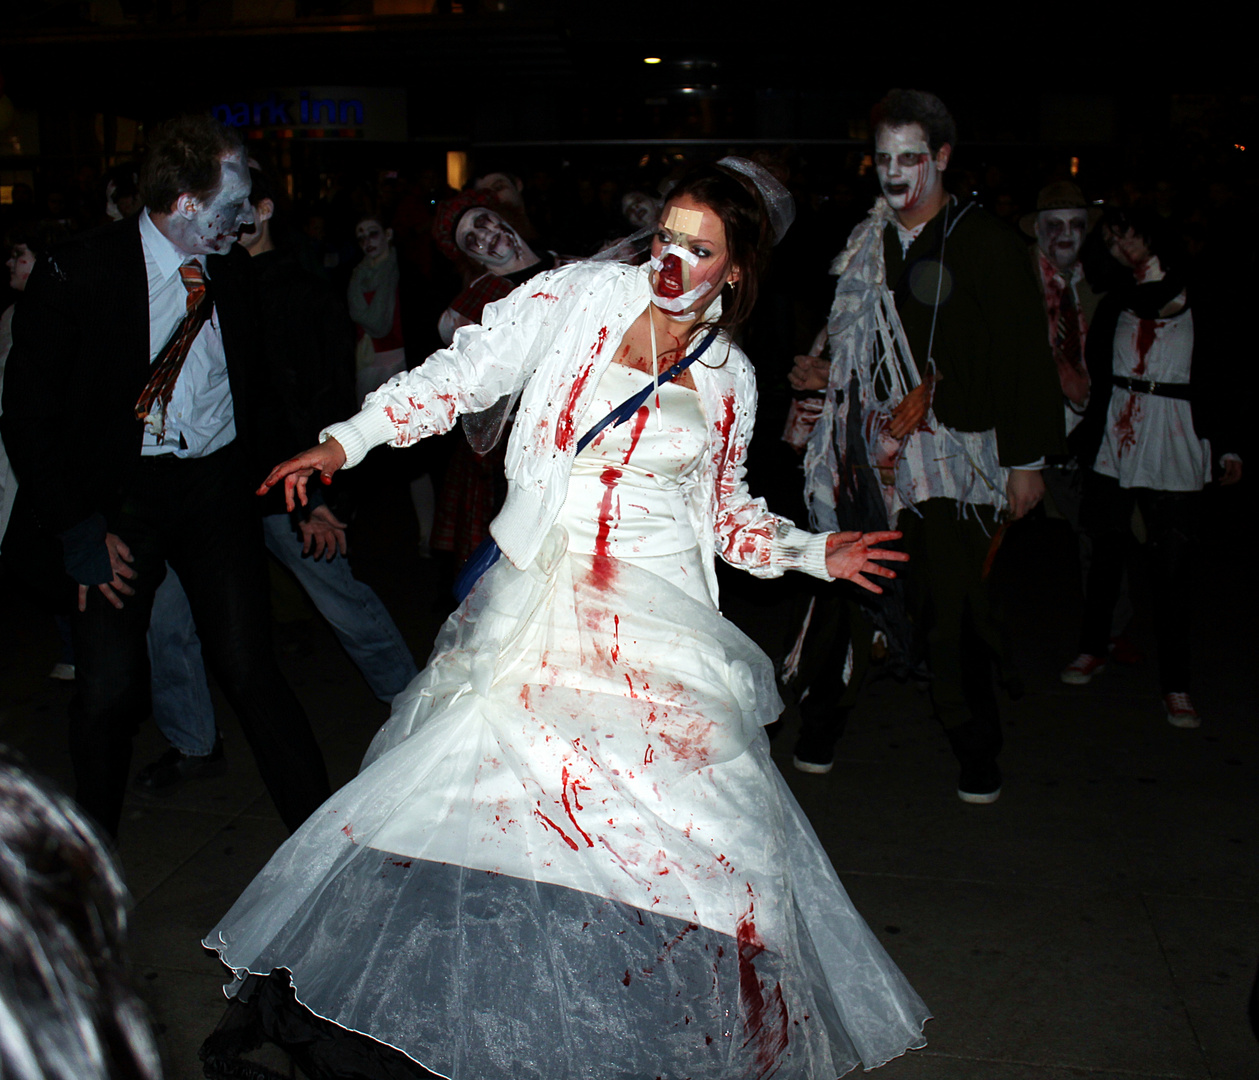 Tanz der Zombies